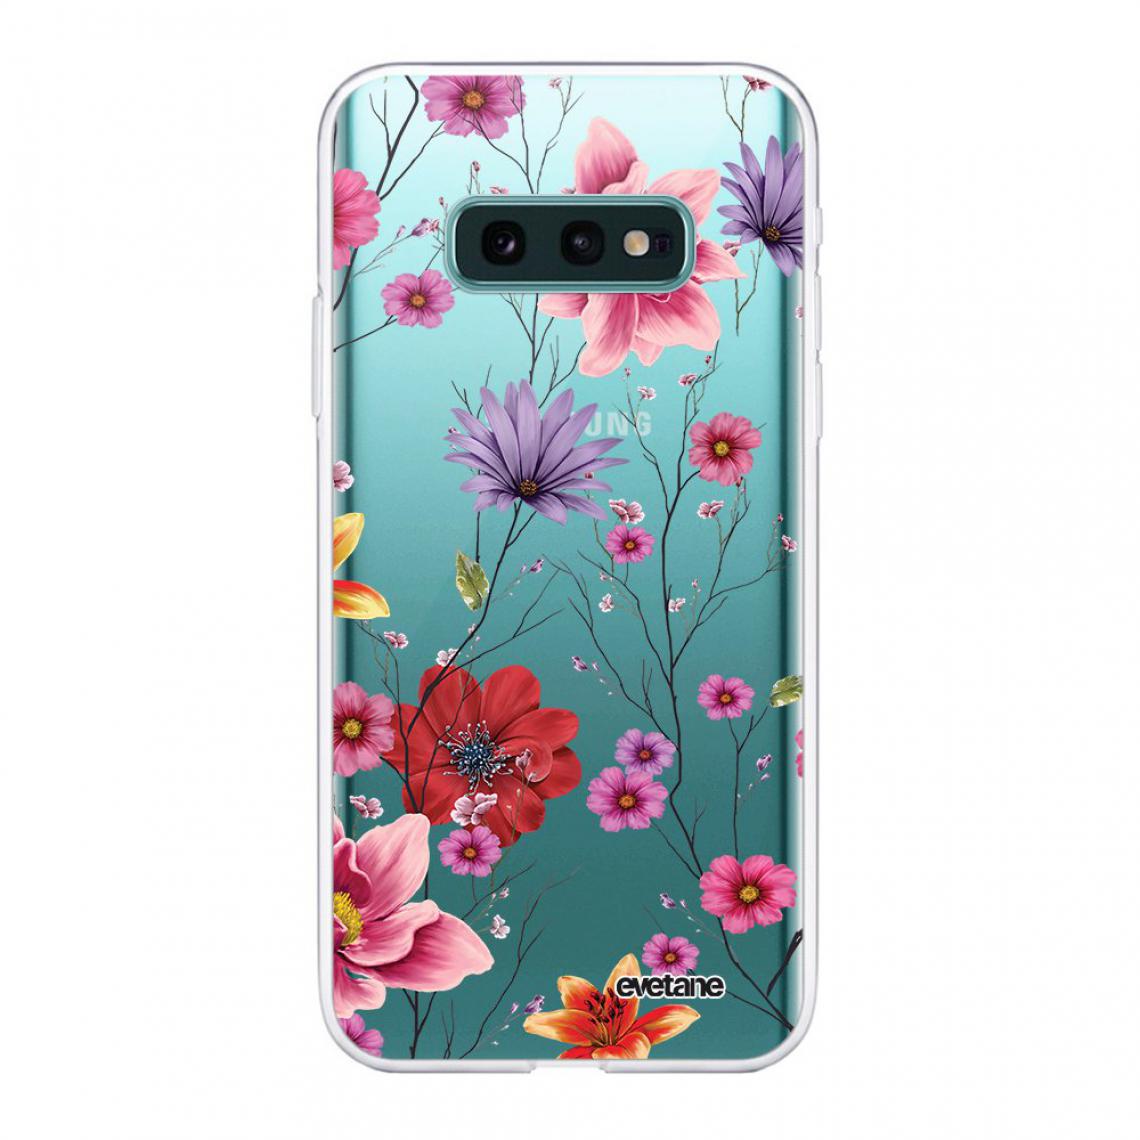 Evetane - Coque Samsung Galaxy S10e 360 intégrale avant arrière transparente - Coque, étui smartphone